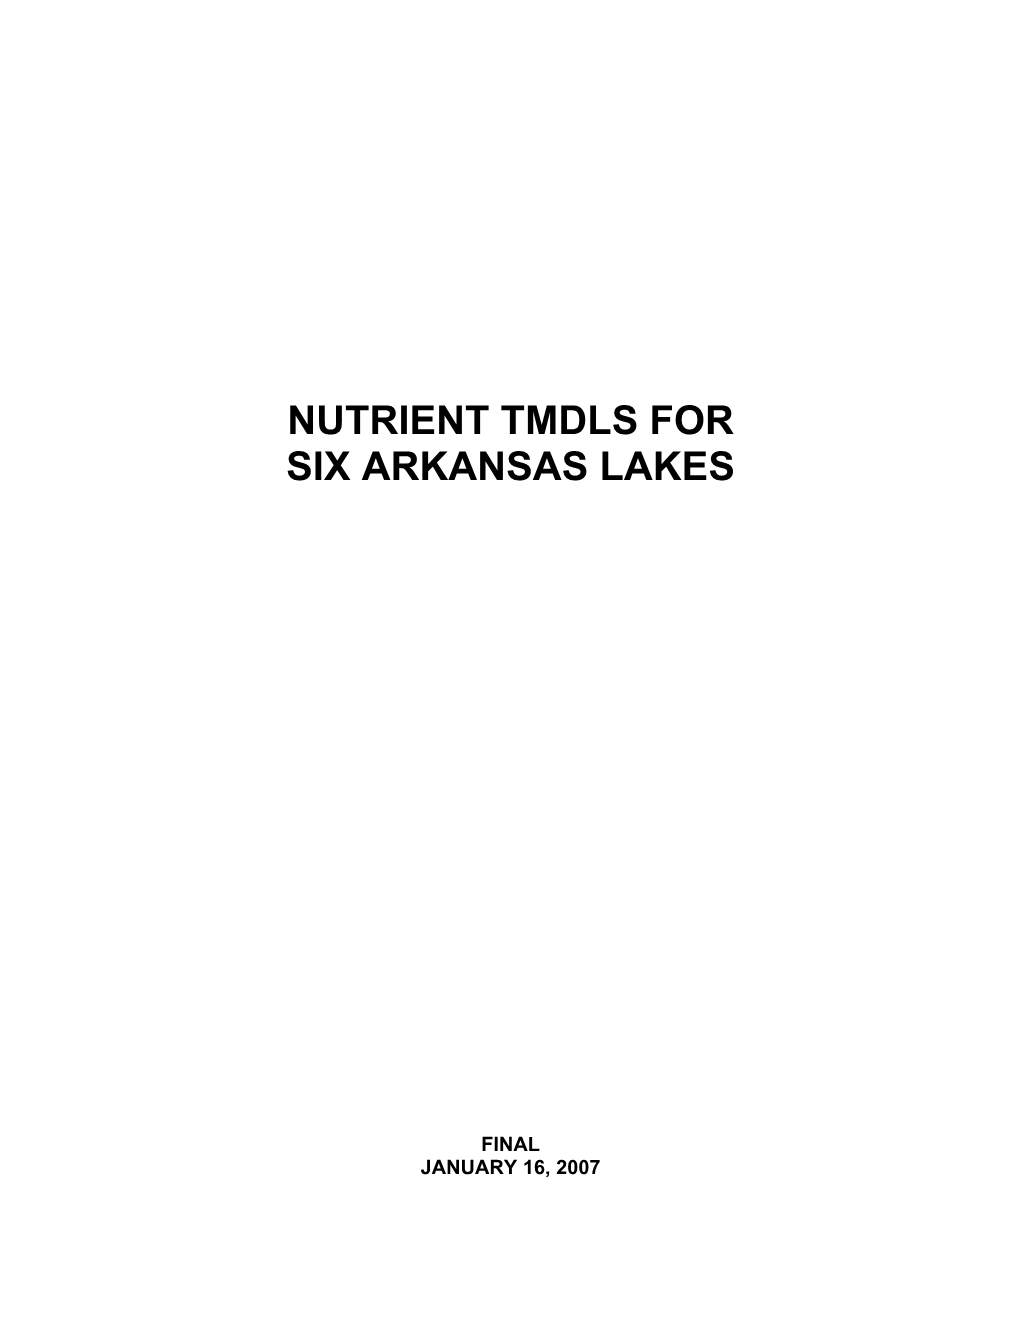 Nutrient Tmdls for Six Arkansas Lakes